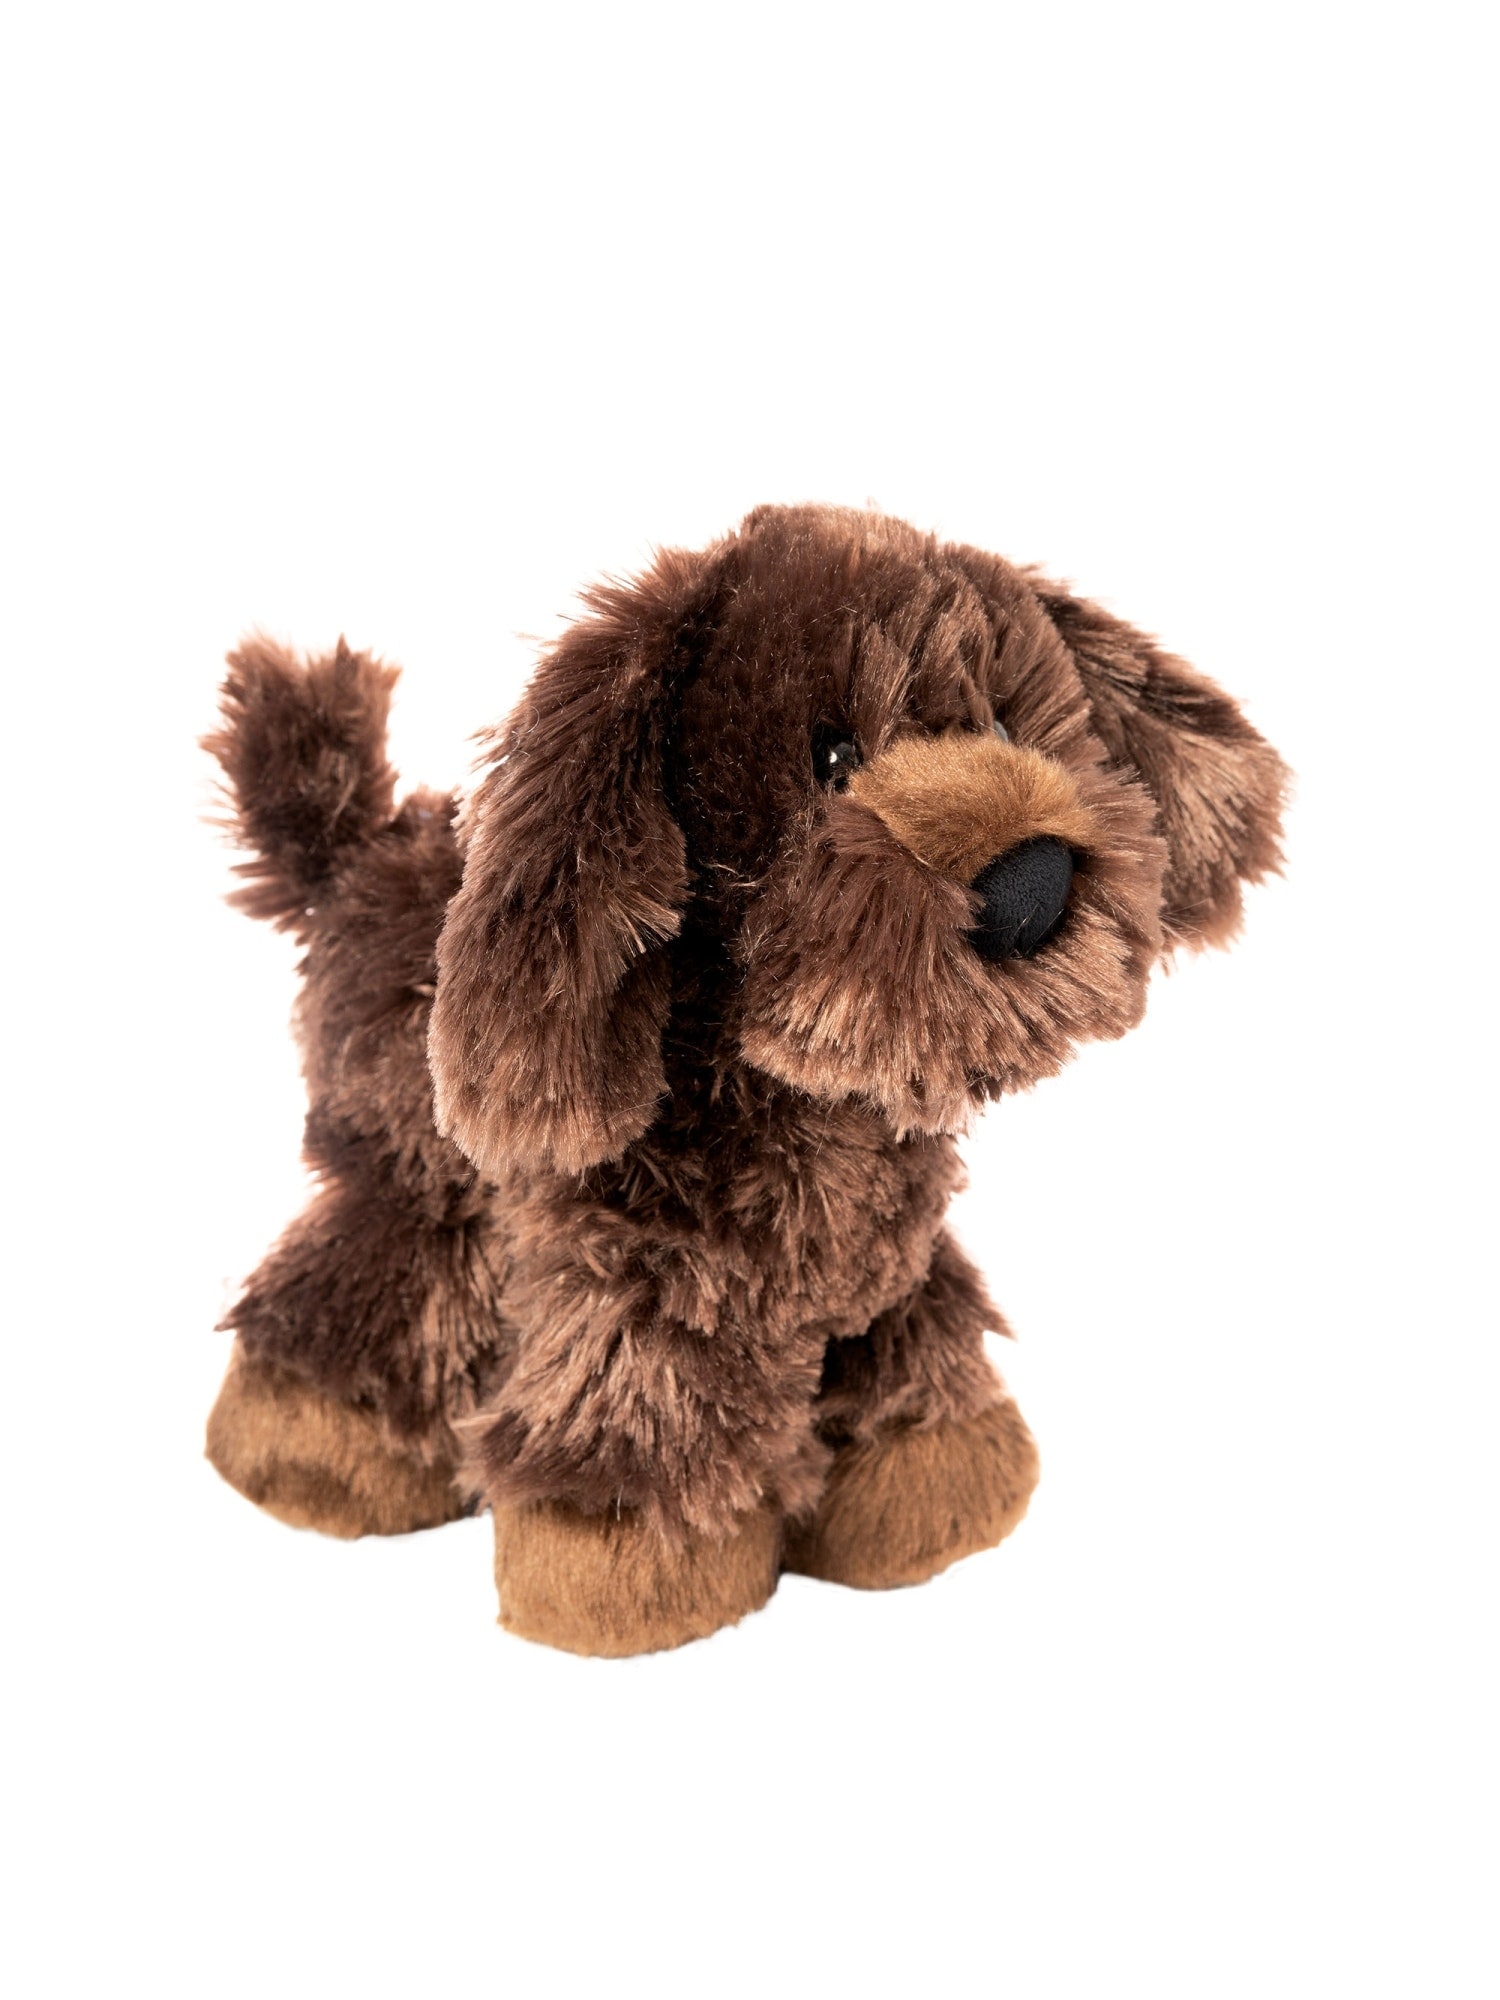 Gap Woolies Brown Dog Stuffed Animal